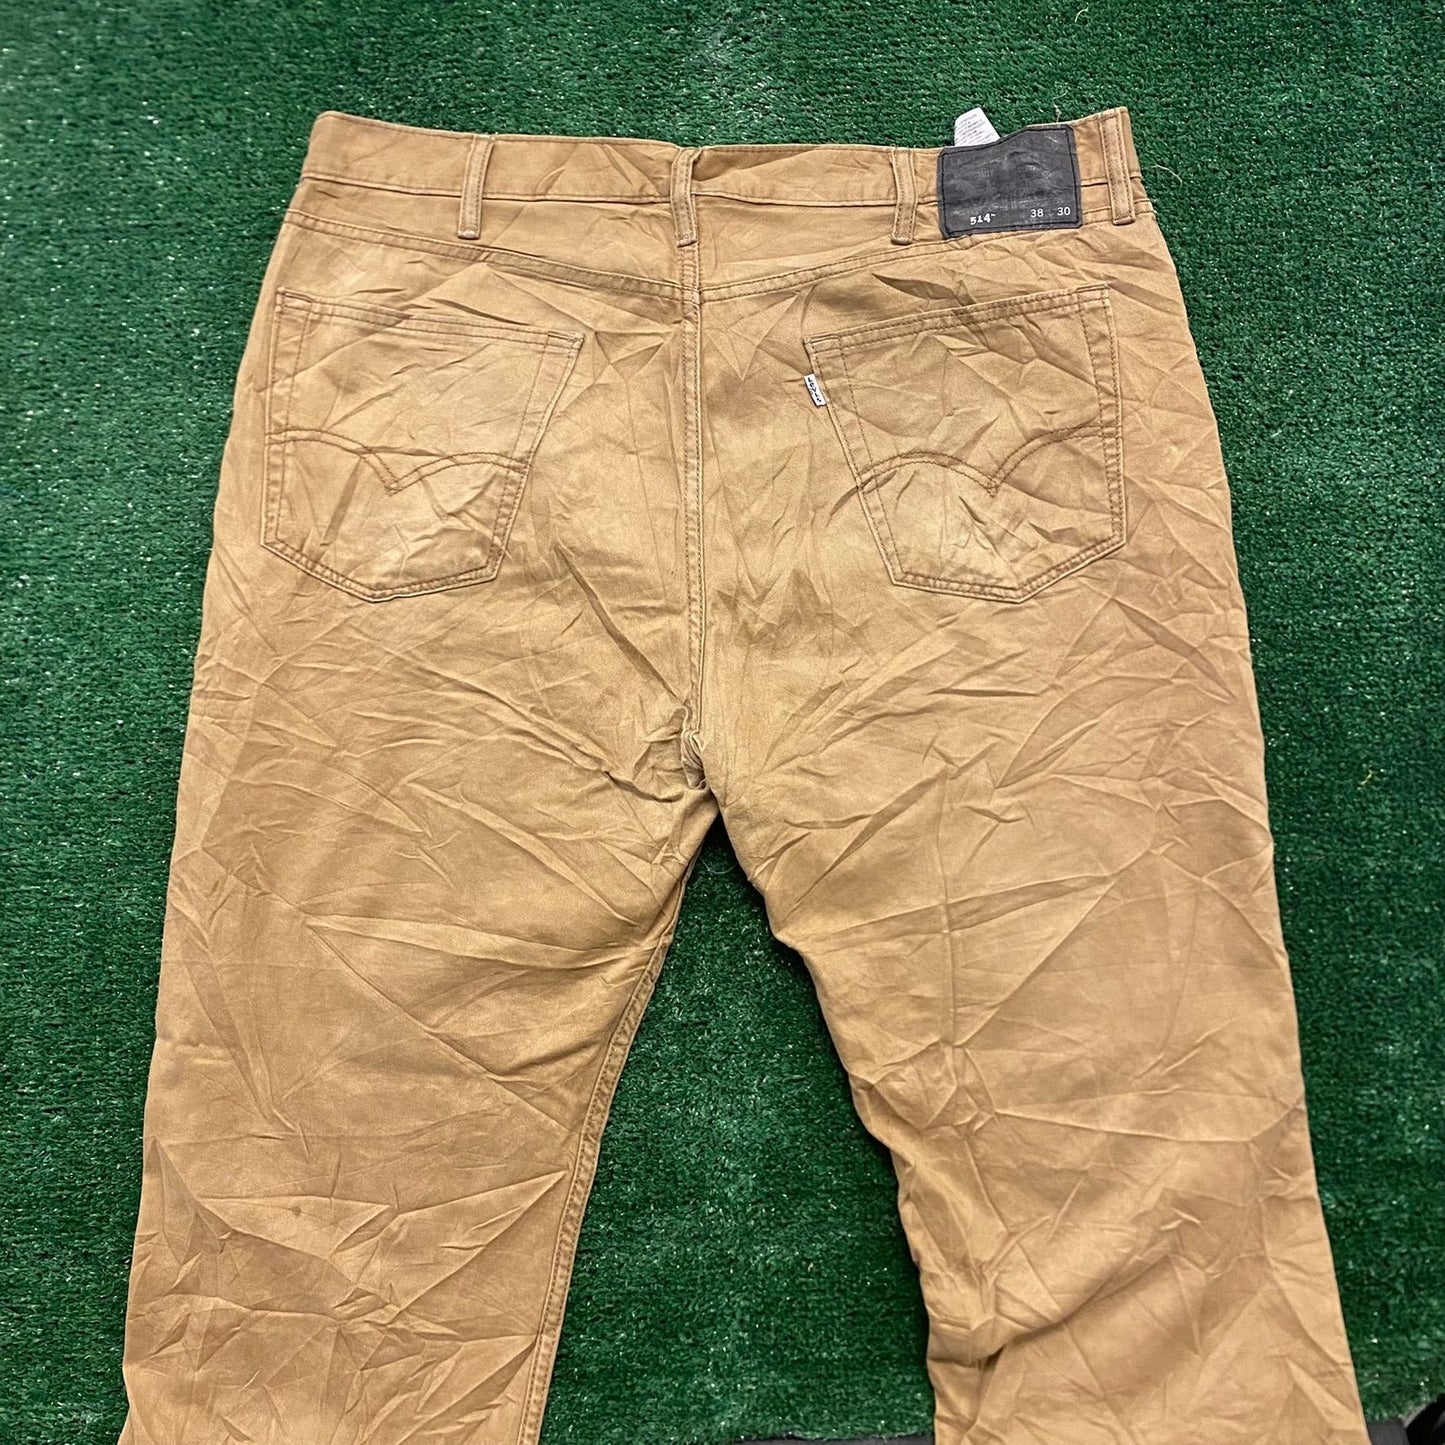 Levi's 514 Straight Fit Vintage Tan Khakis Chinos Pants